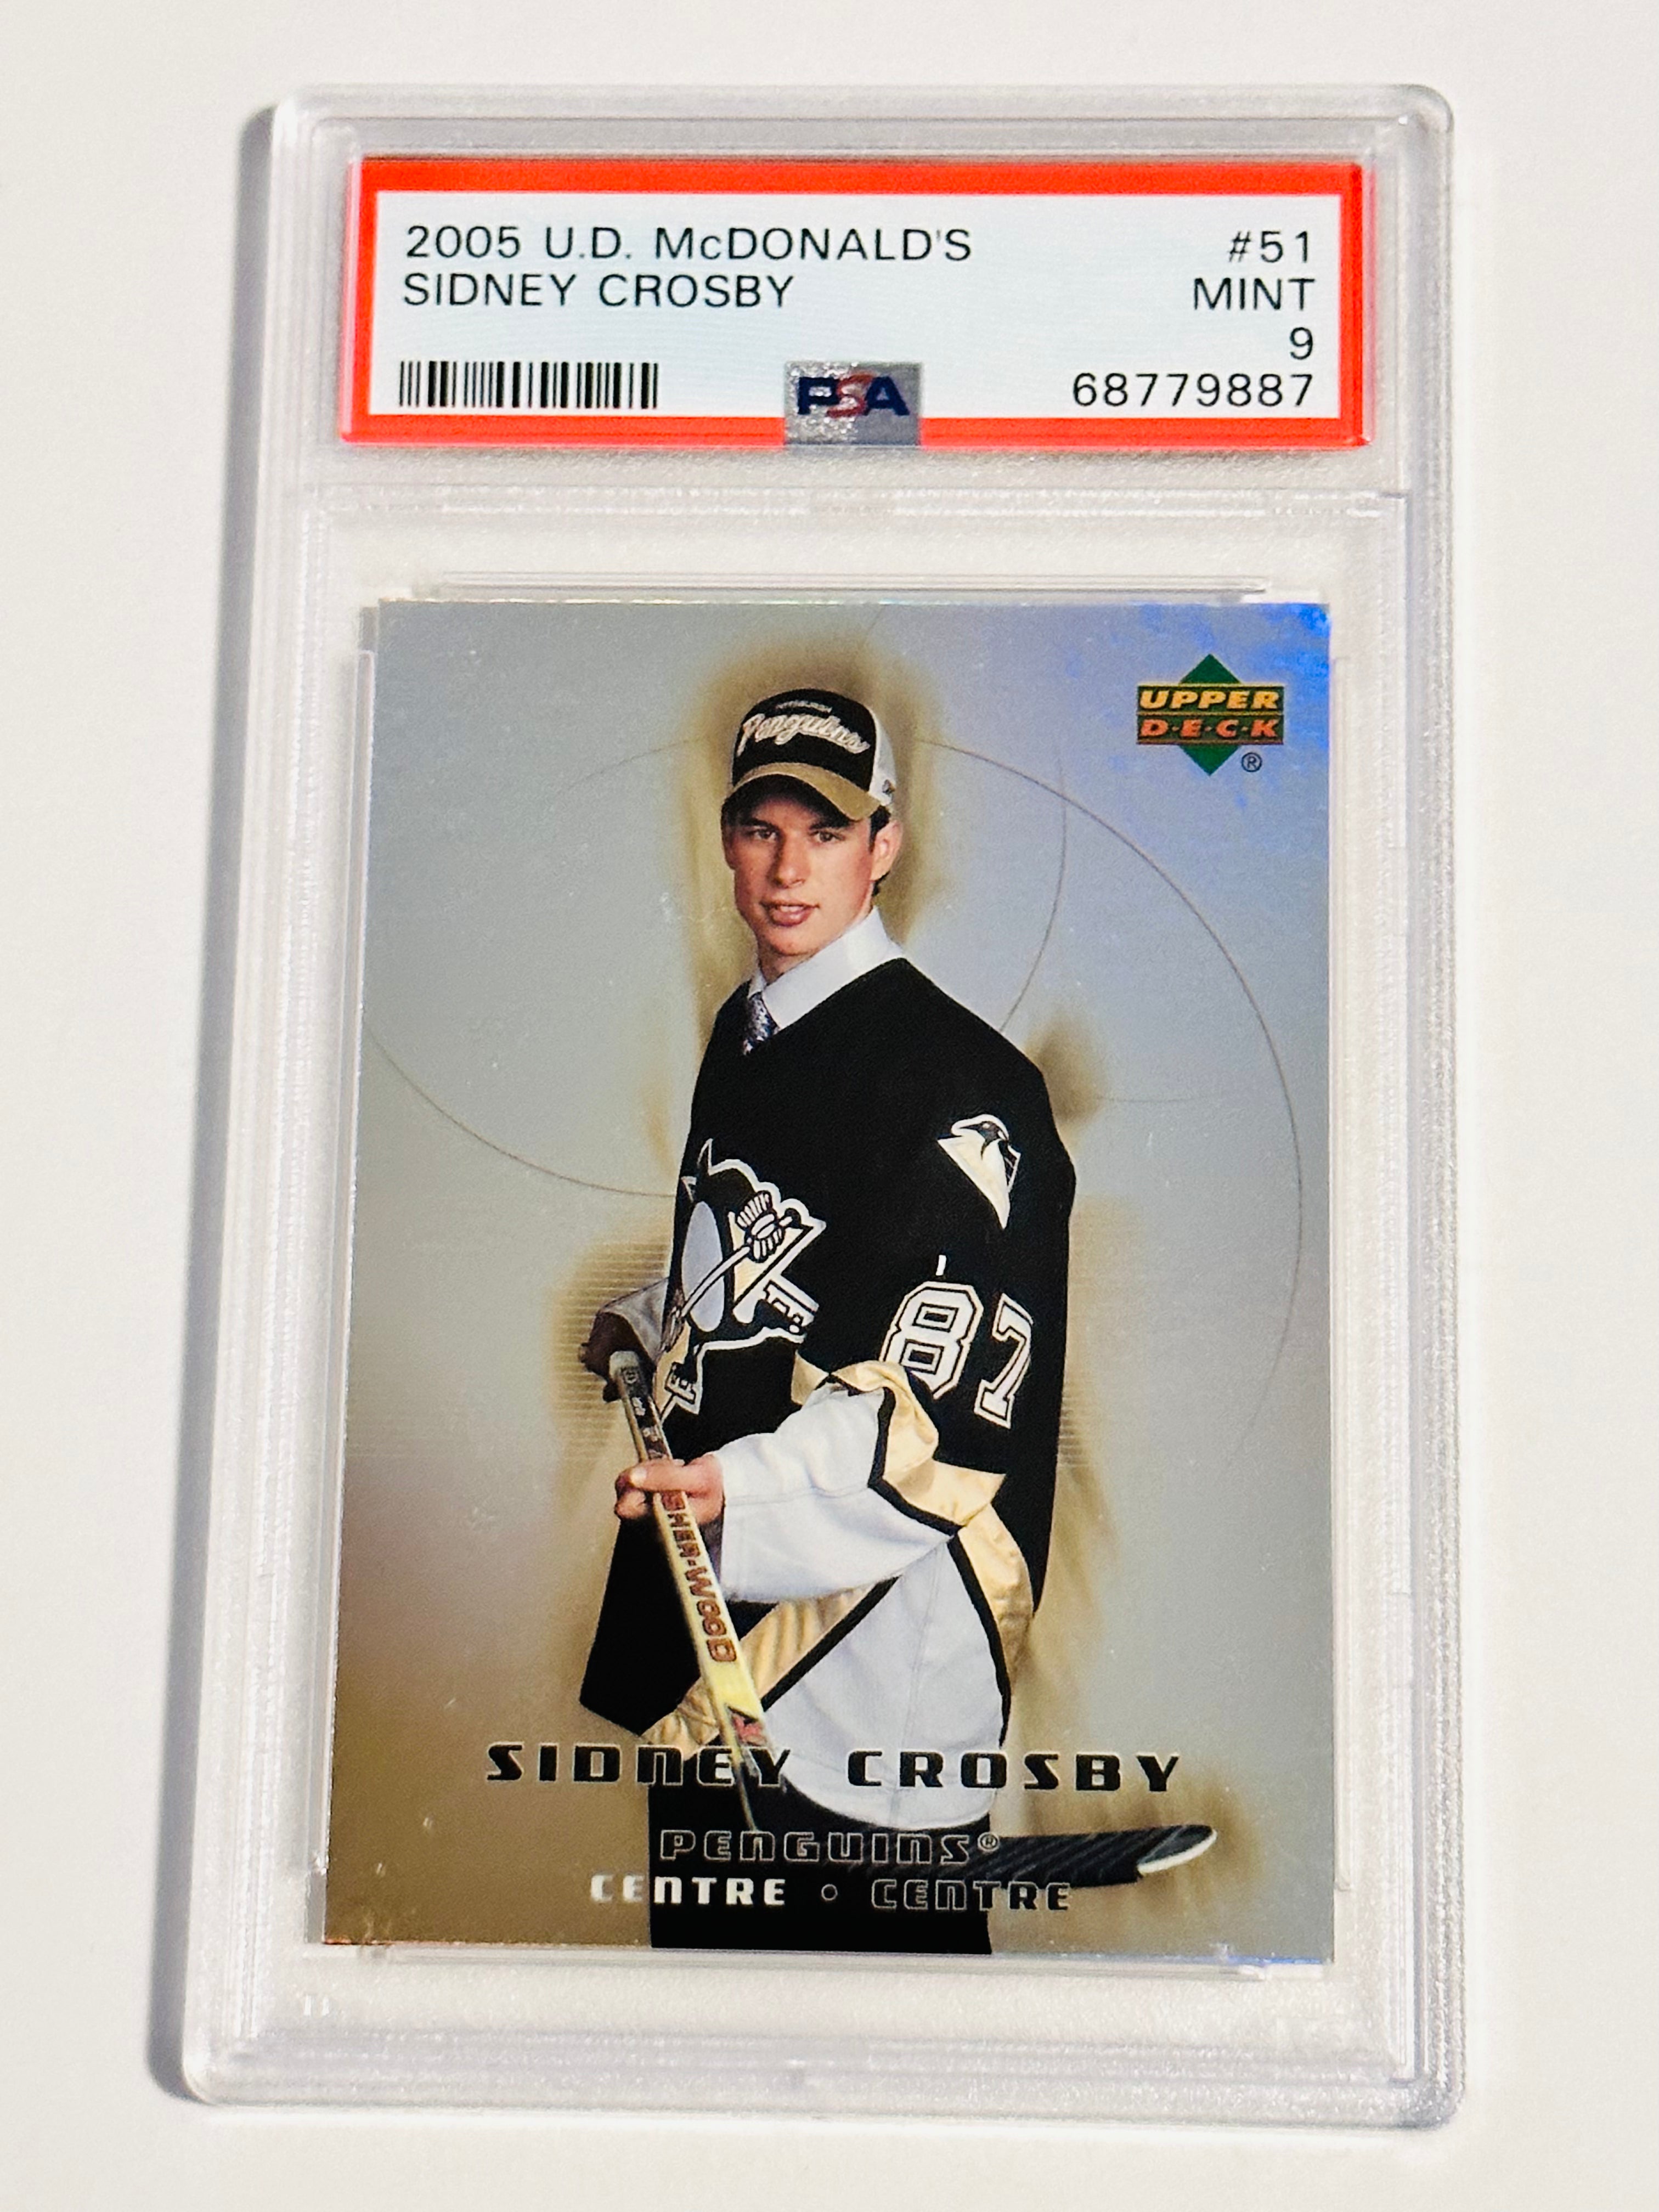 Sidney Crosby McDonalds rare High grade PSA 9 rookie hockey card 2005